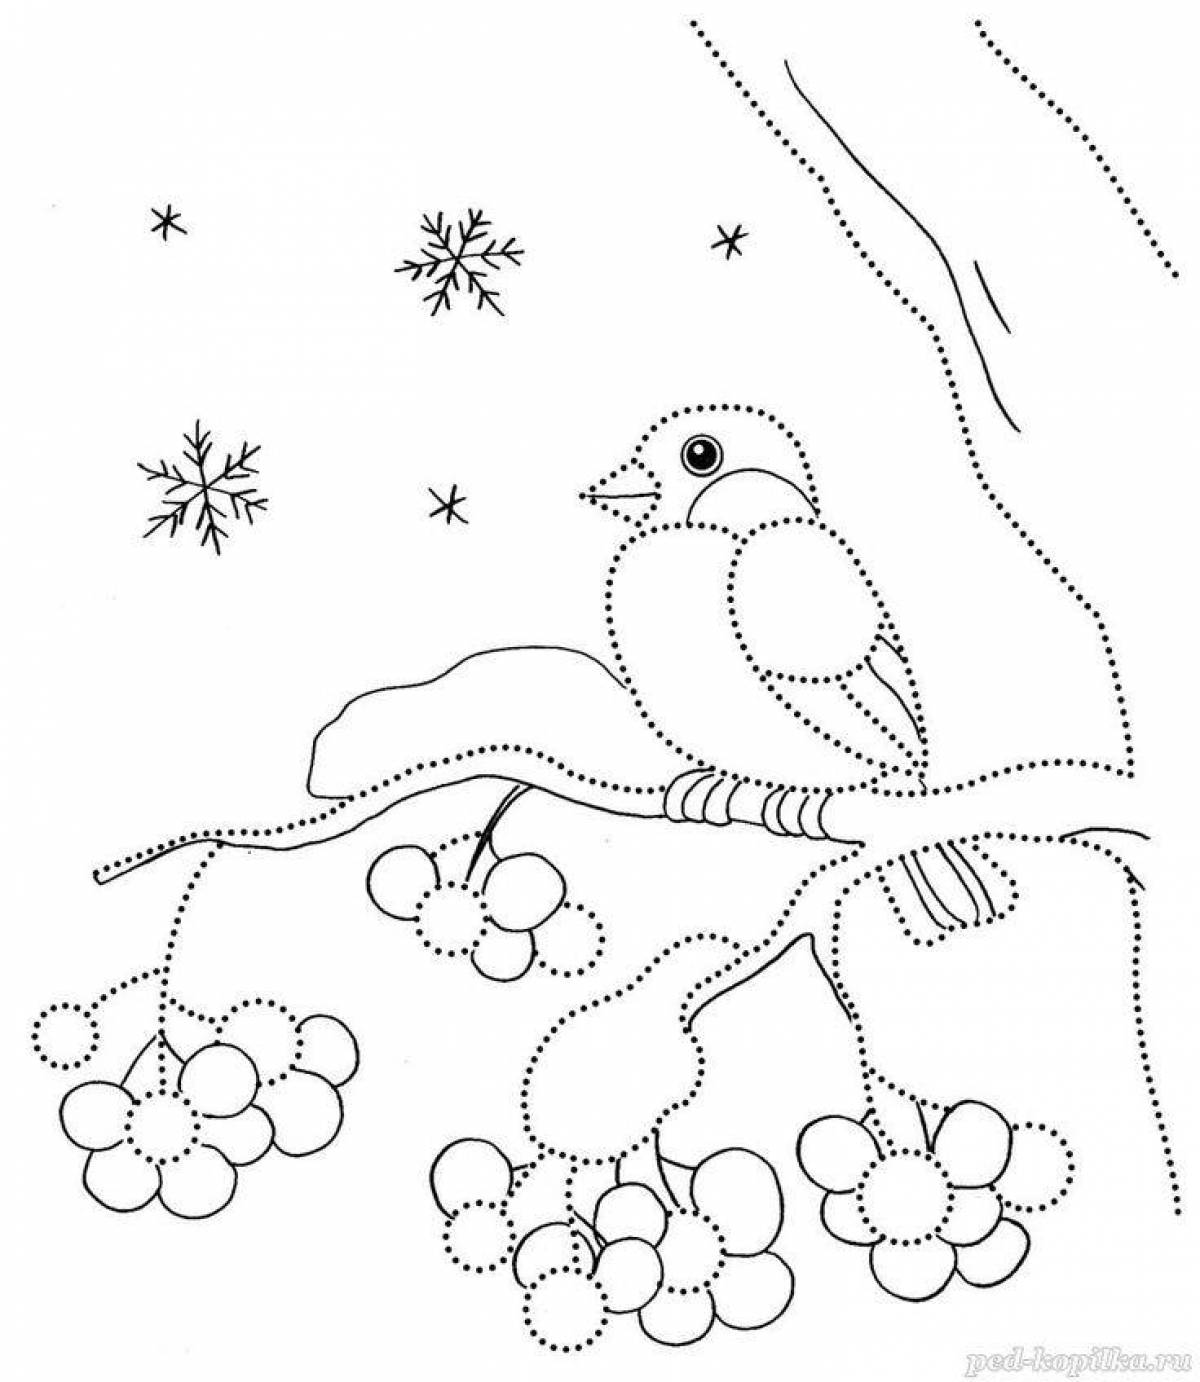 Wintering birds for children 4 5 #1